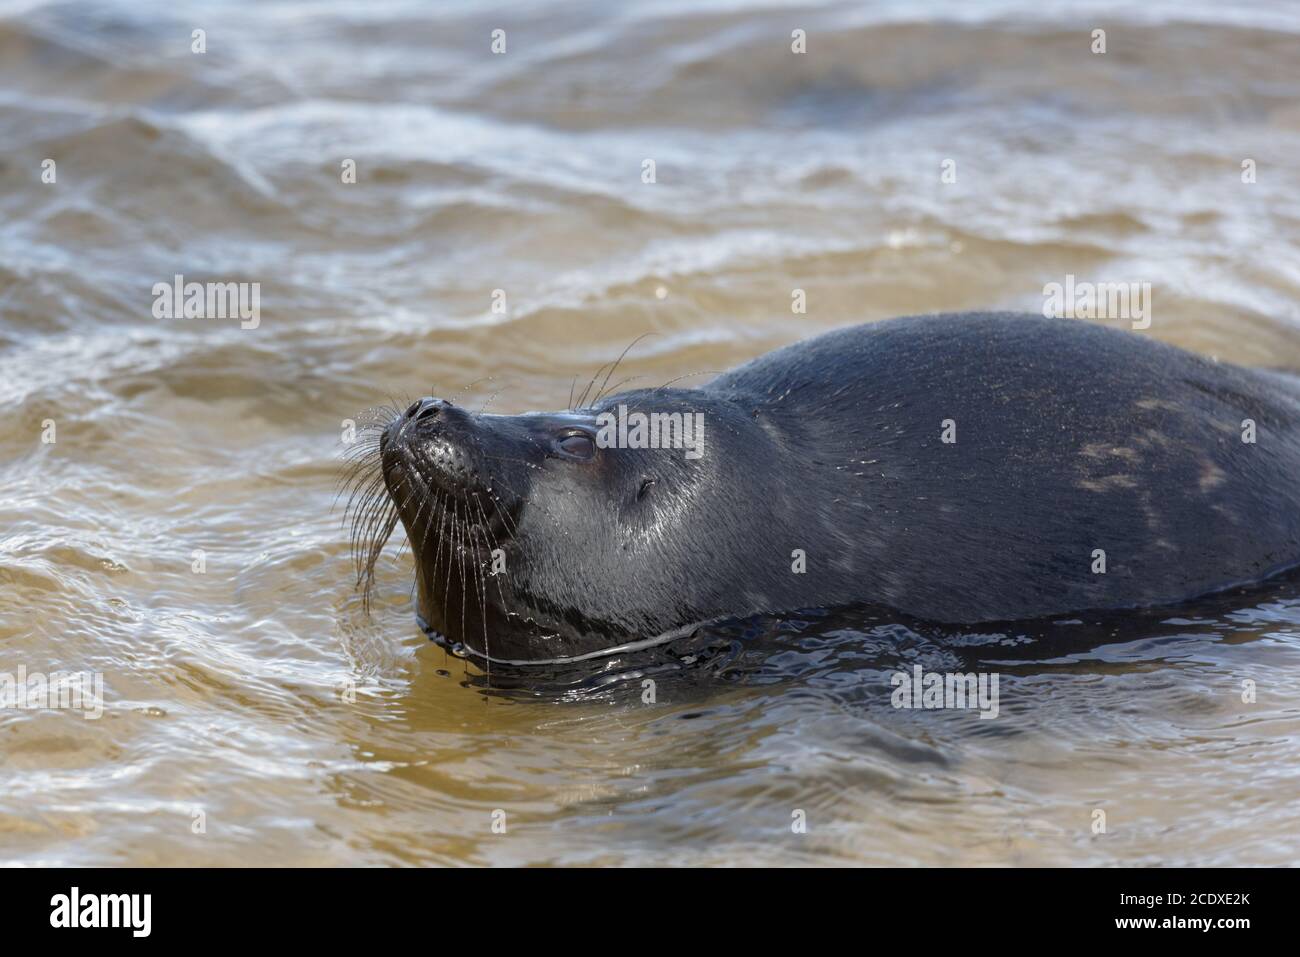 Young Ladoga ringed seal in the lake Ladoga, Valaam island, Russia Stock Photo